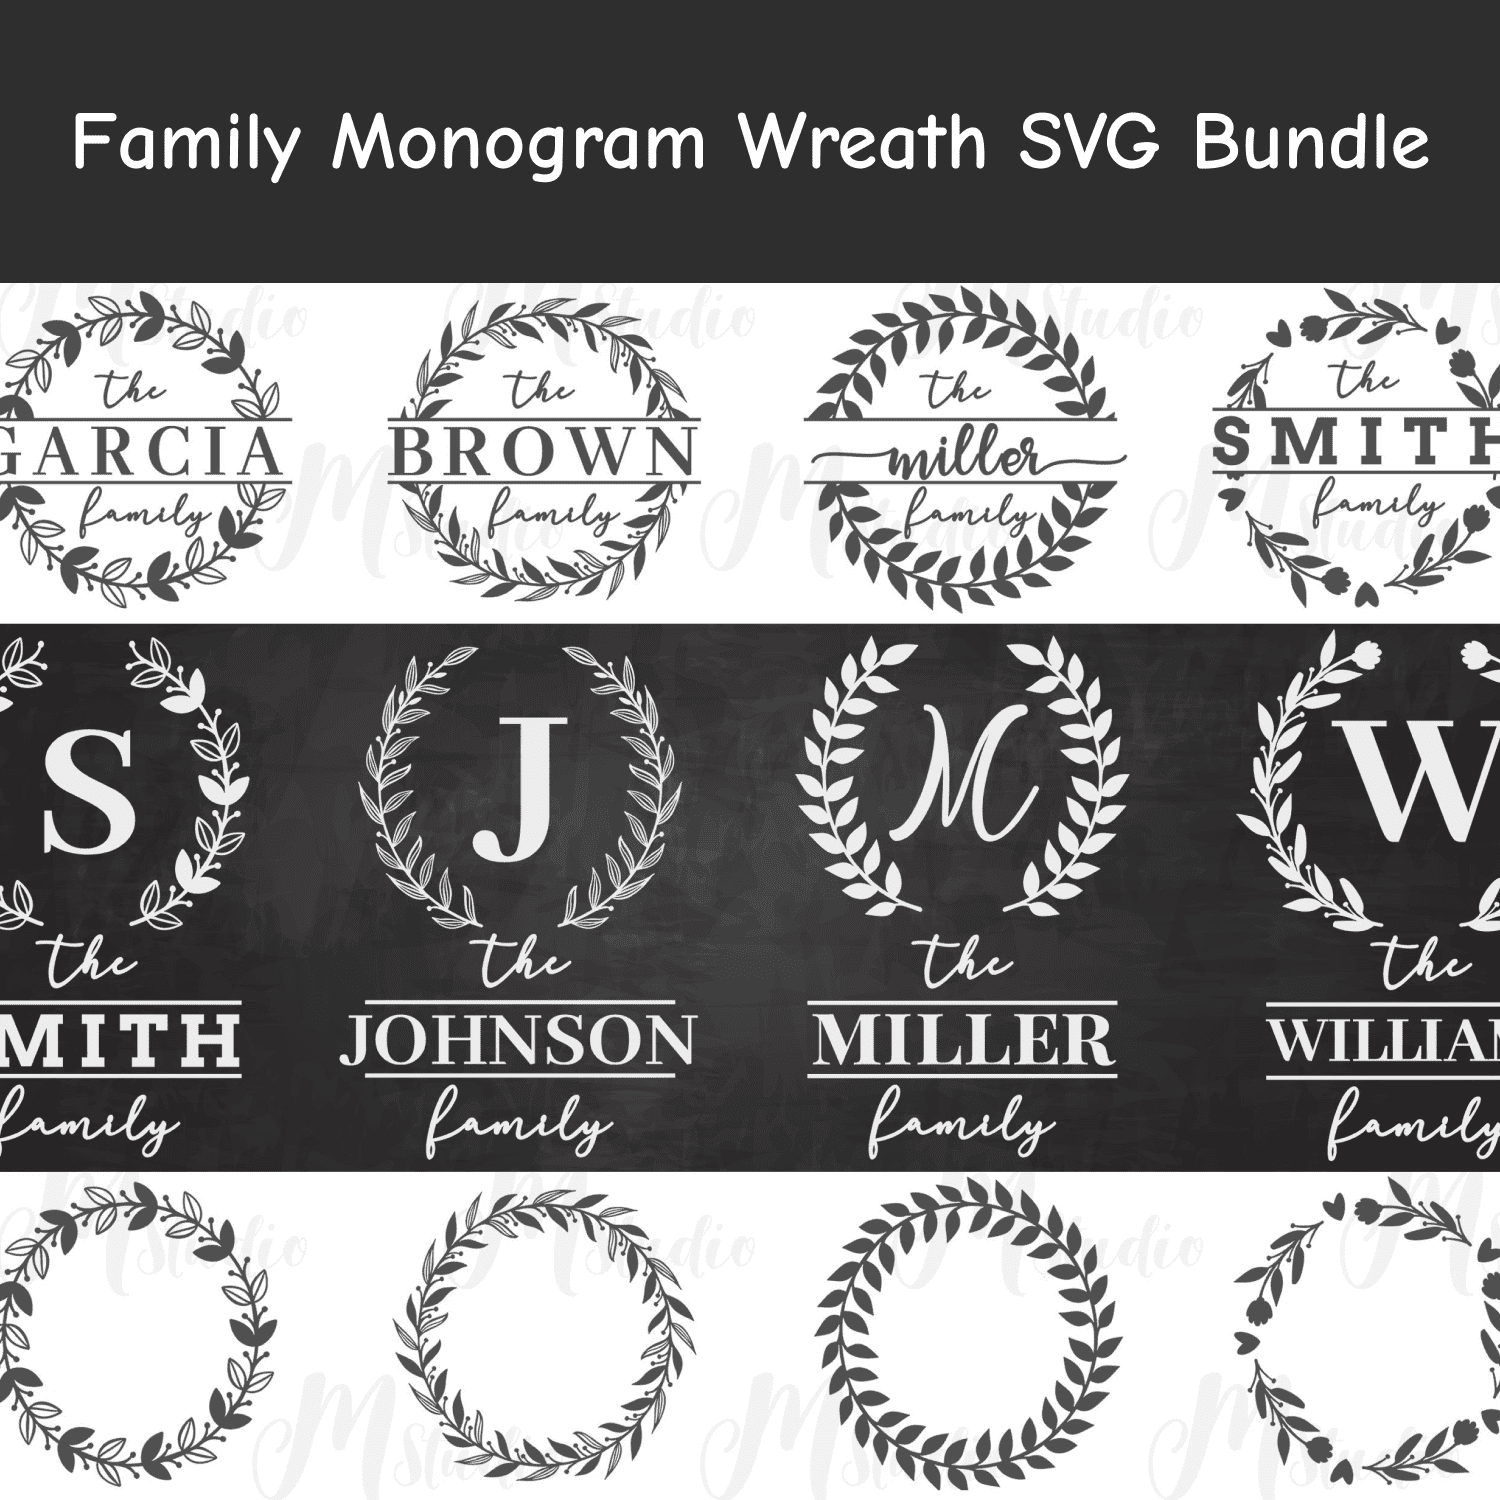 Family Monogram Wreath SVG Bundle.